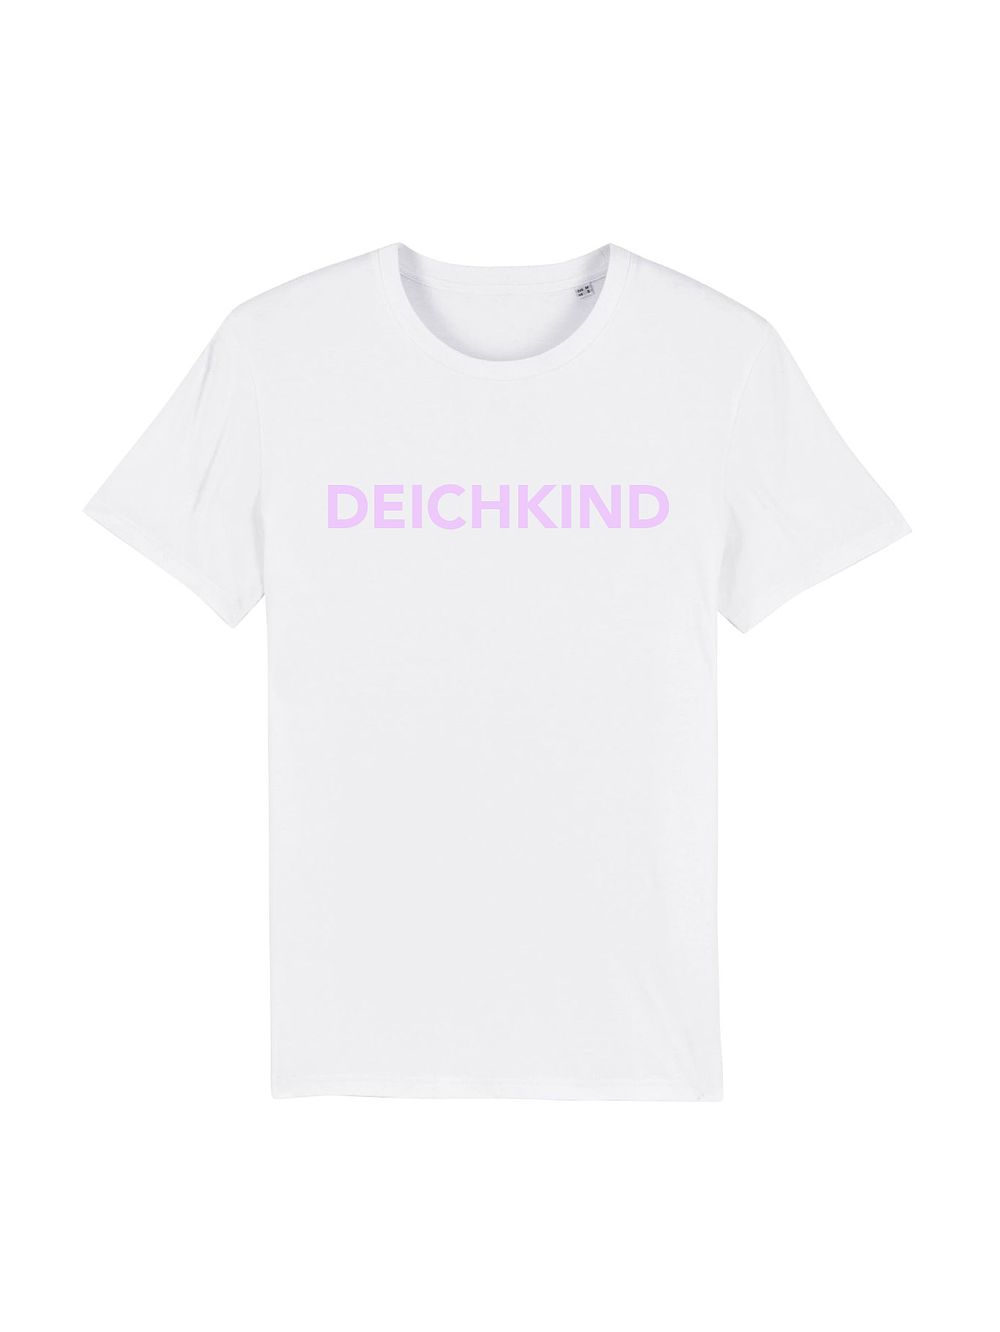 DEICHKIND - T-Shirt - Weiß/Rosa - Schriftzug